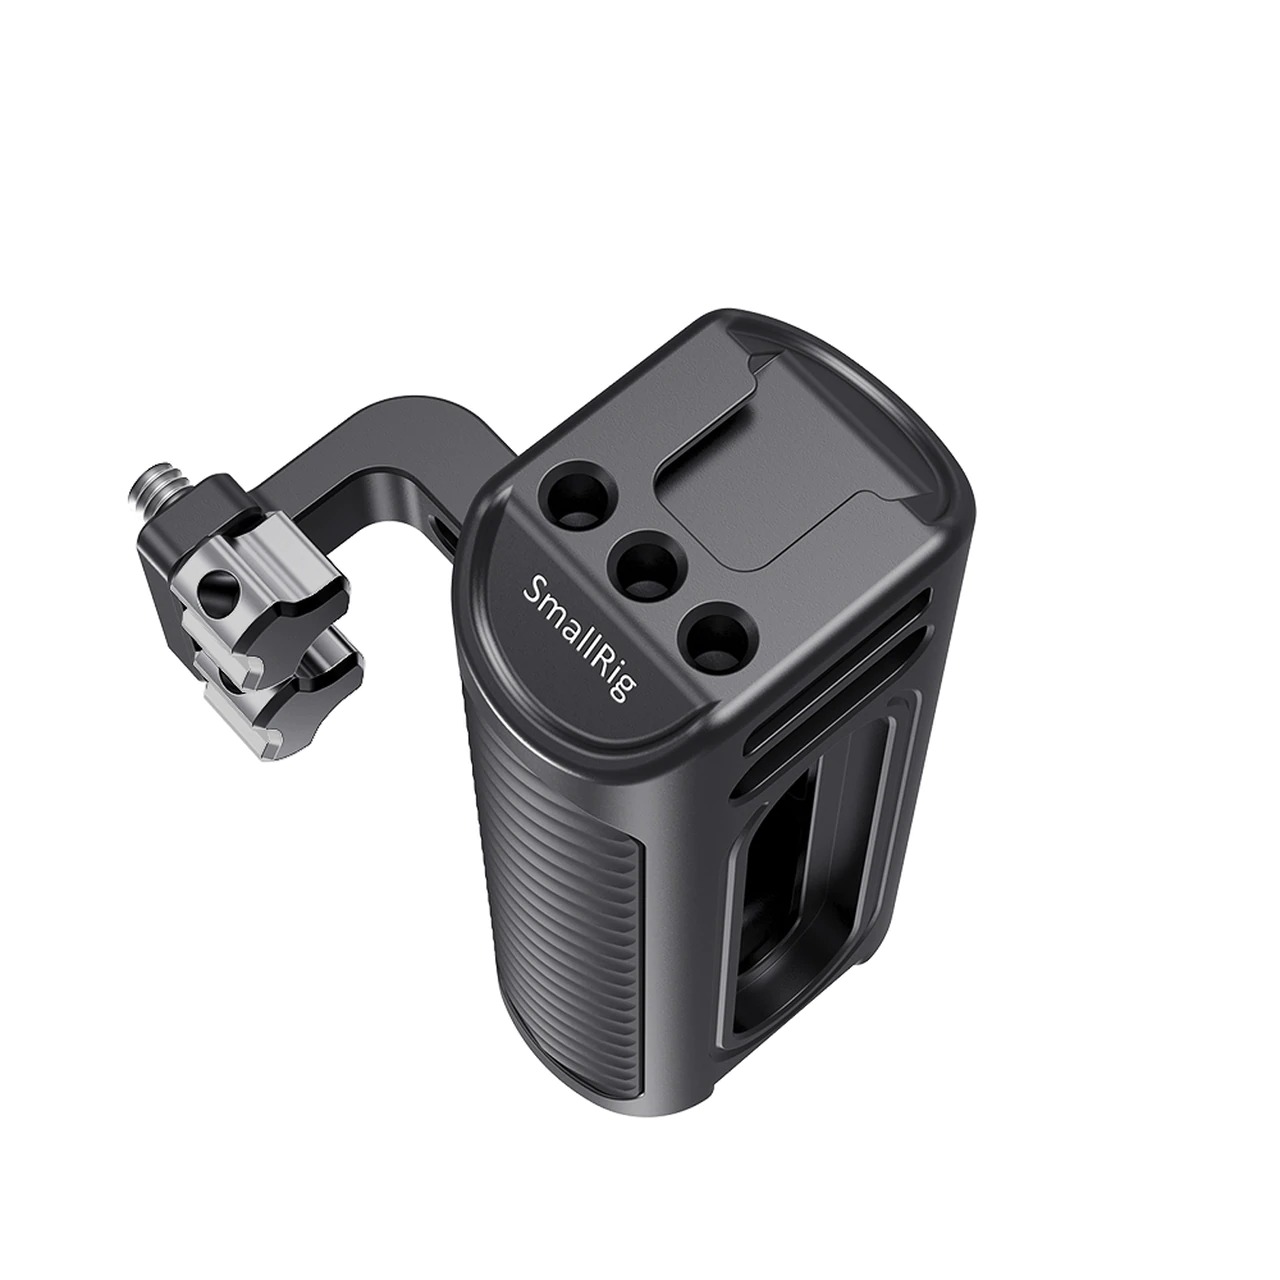 SmallRig Aluminum Universal Side Handle HSS2425 ด้ามจับด้านข้าง ชุดริกกล้อง ติดได้ทั้งมือซ้าย-ขวา ปรับความสูงได้ กริปซิลิโคนกันลื่น ราคา 1700 บาท